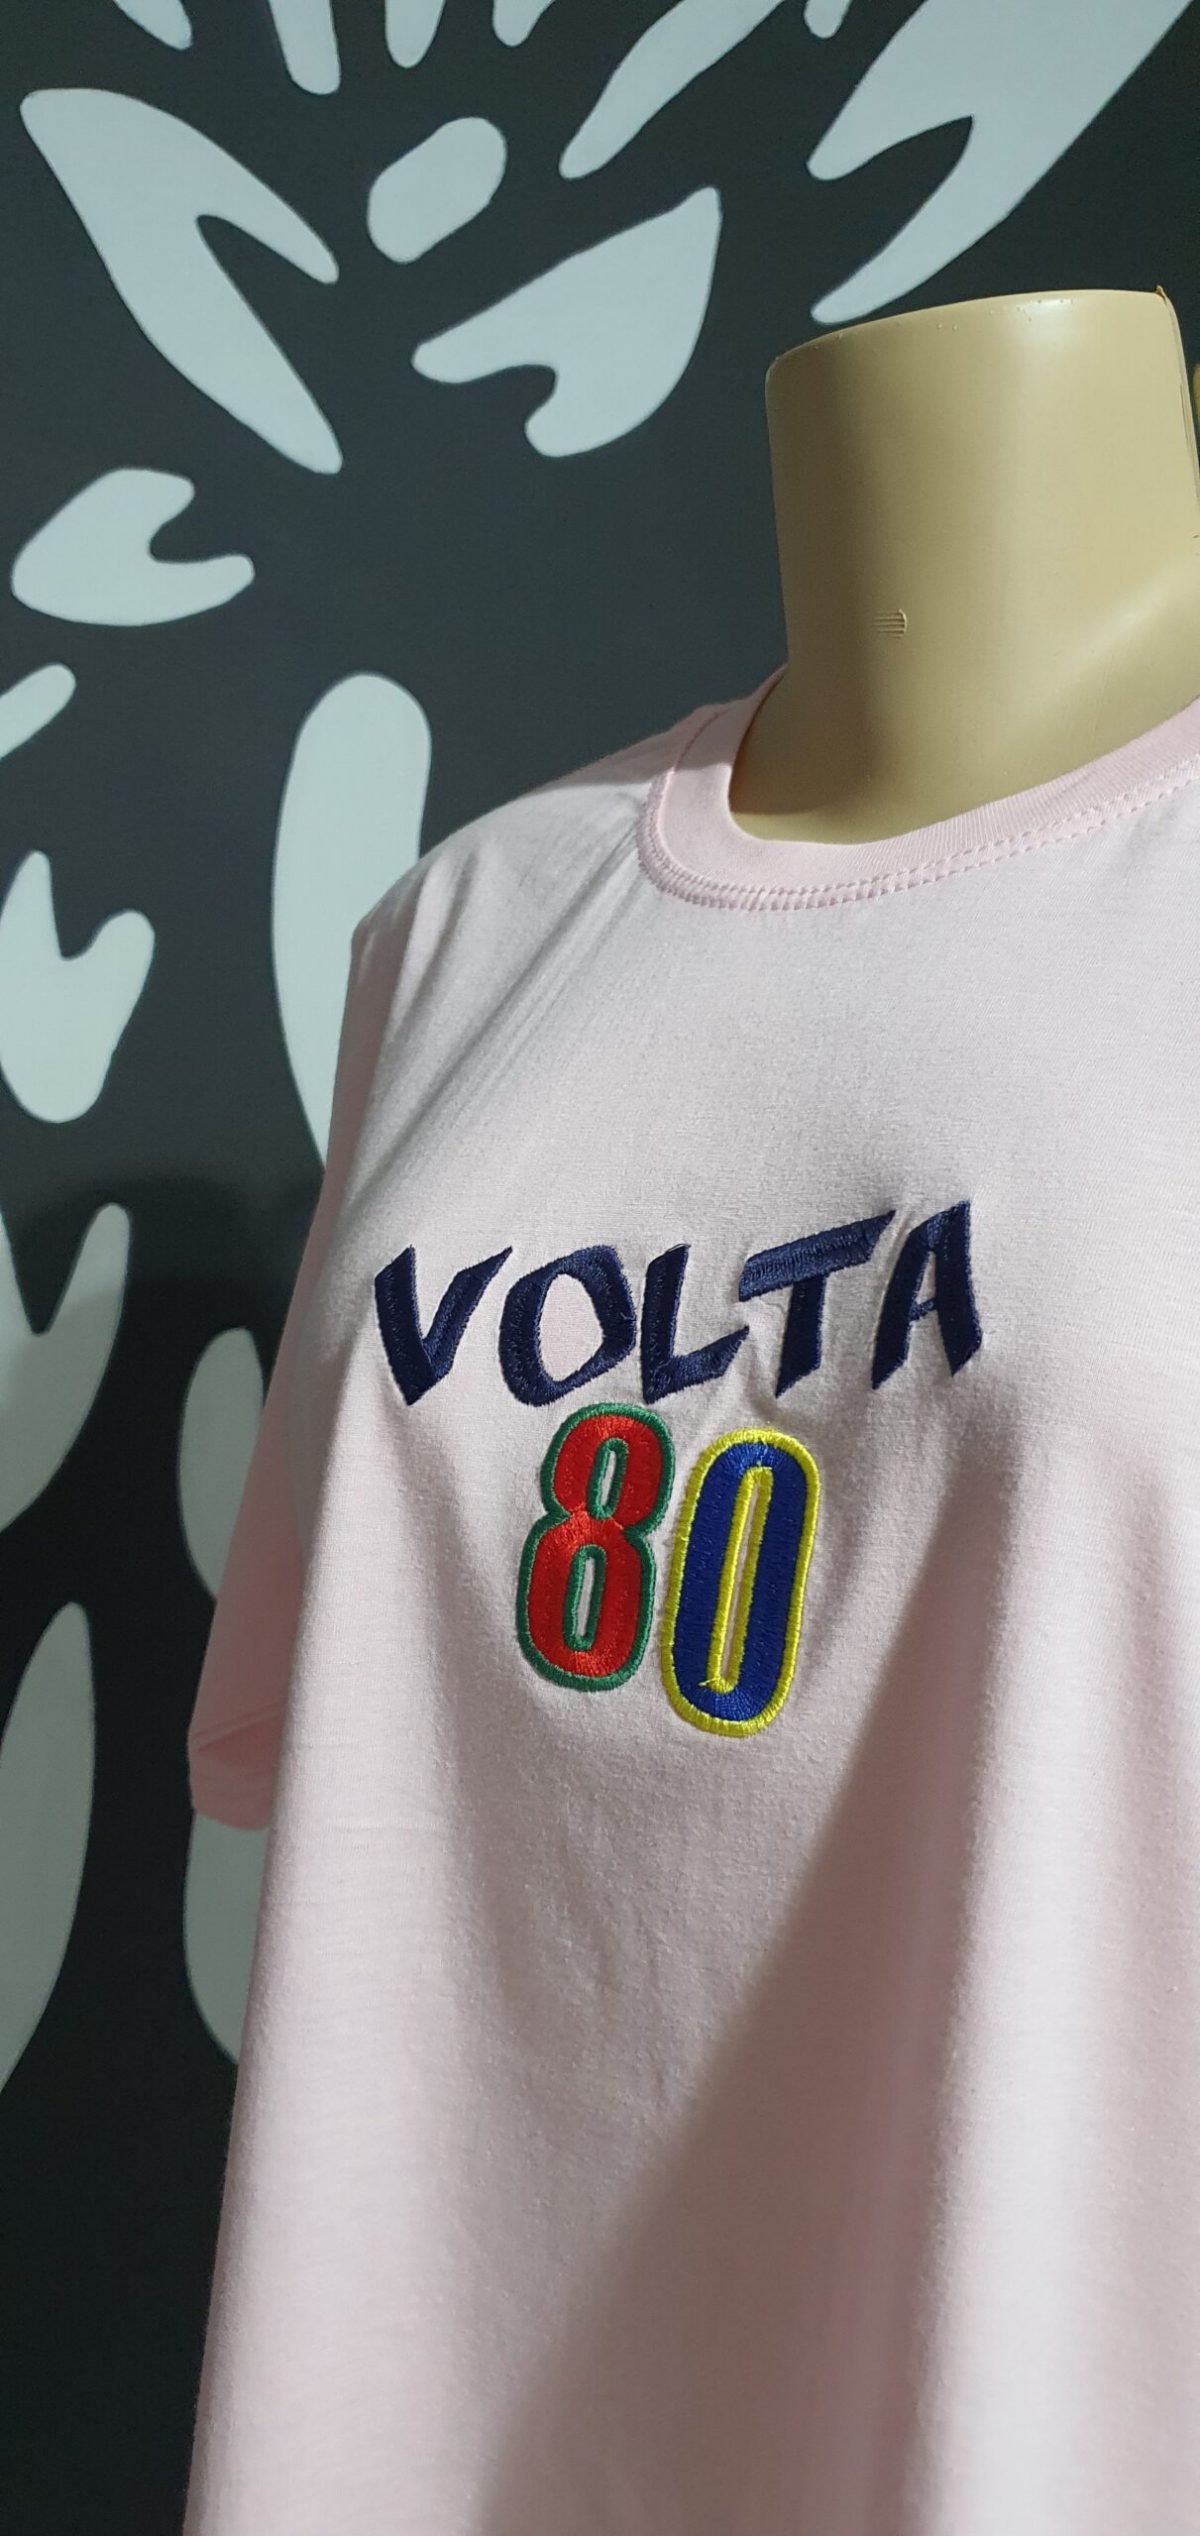 Camiseta bordada feminina - Volta 80 - Logotipo Volta 80 - by Bordado & Cia - @bordado.cia @volta80